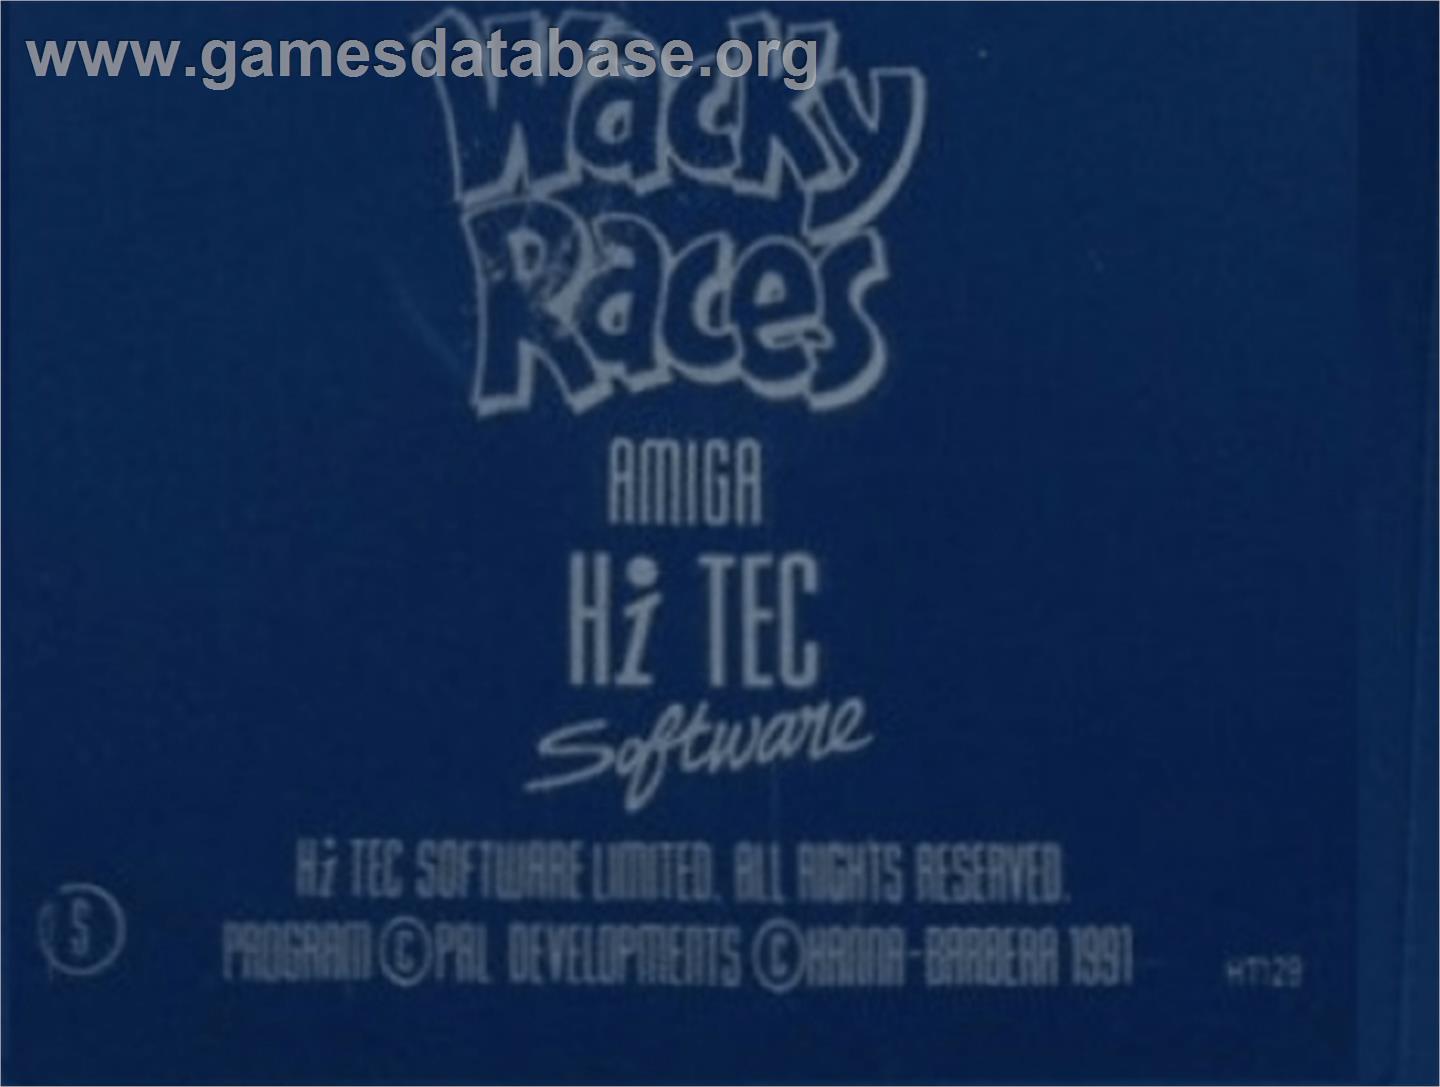 Wacky Races - Commodore Amiga - Artwork - Cartridge Top